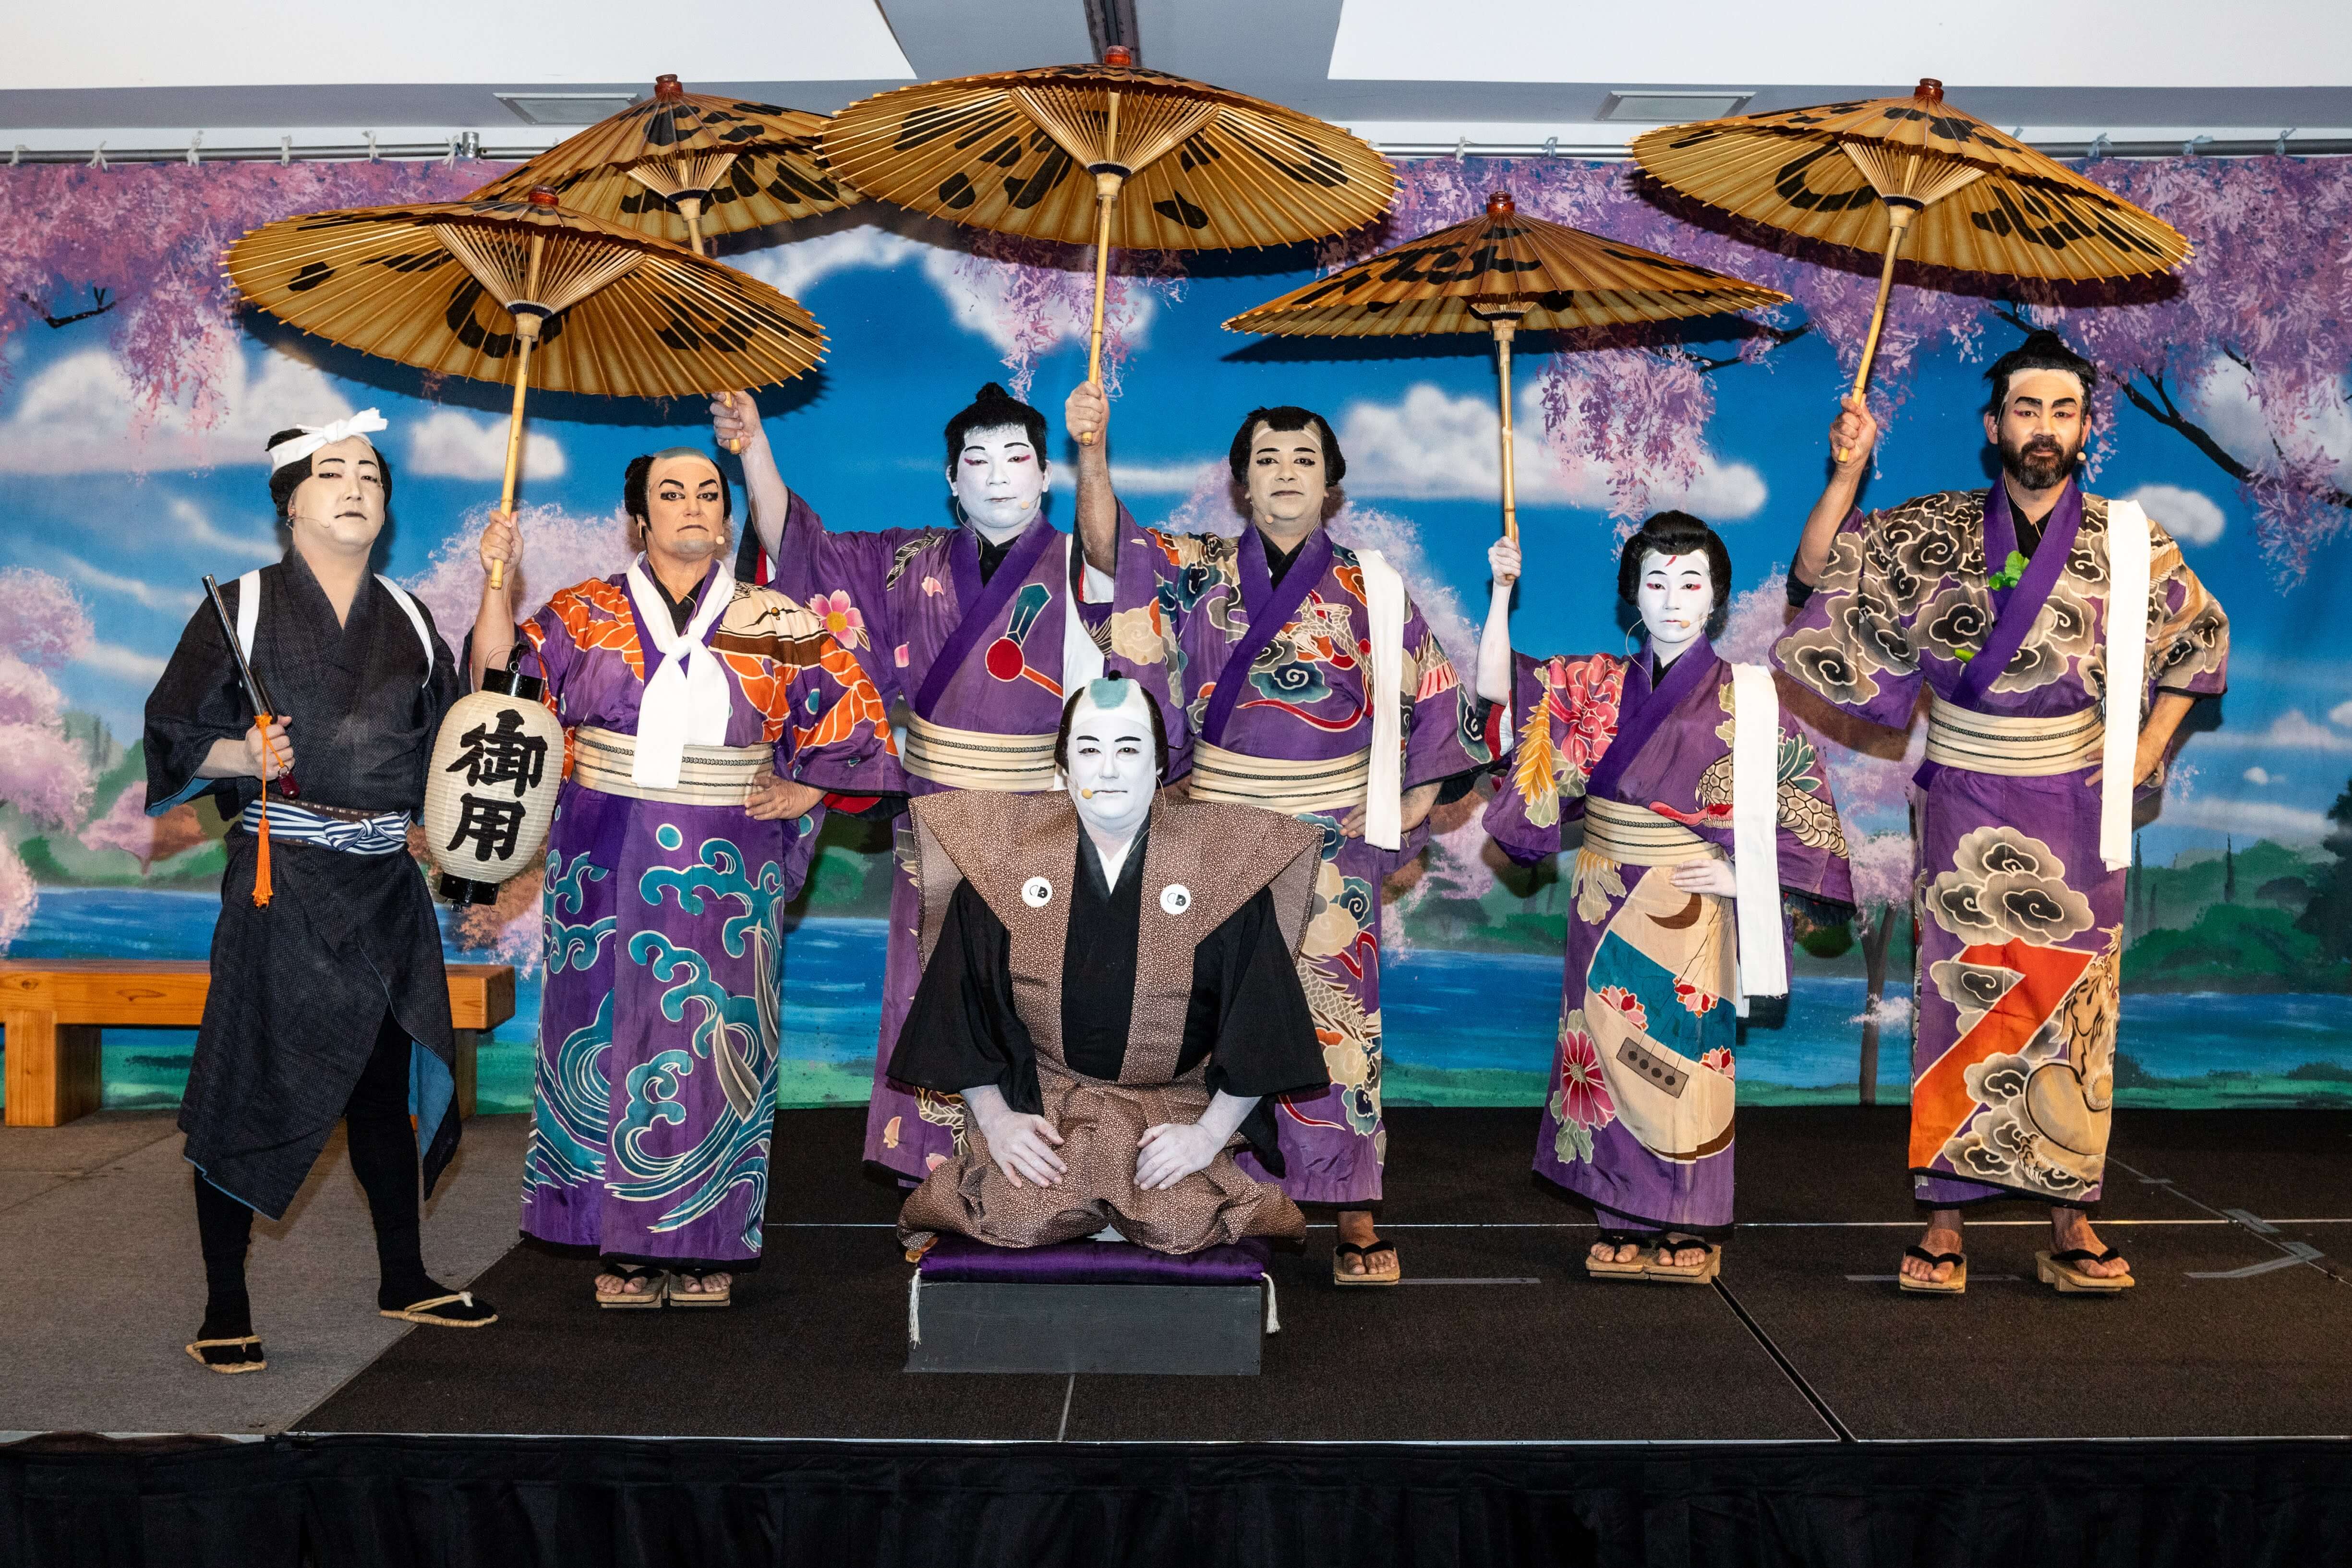 Otsukaresama deshita to our Kabuki cast! From left to right: Aaron Muraki, Shannon Cleary, John Leano, Joy Barua, Tobie Egami, David Jones. Seated: Craig Hirasaki